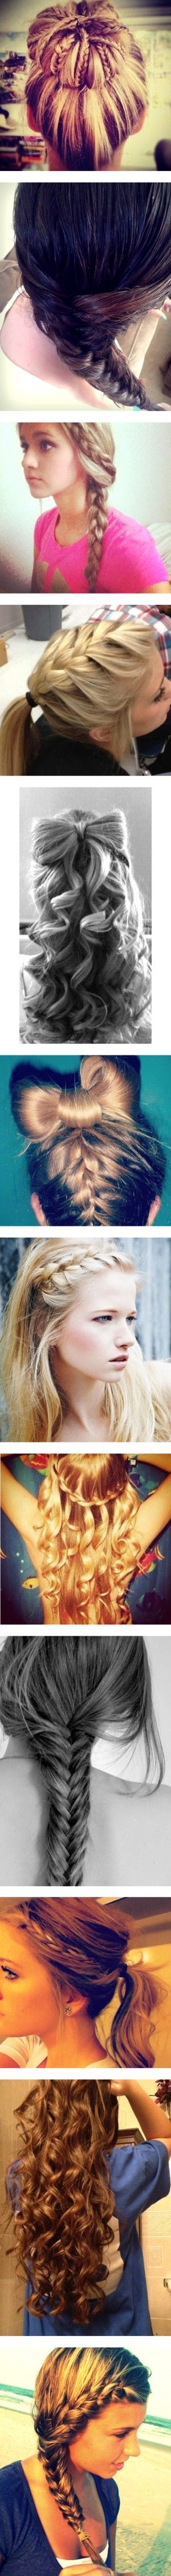 braids and curls